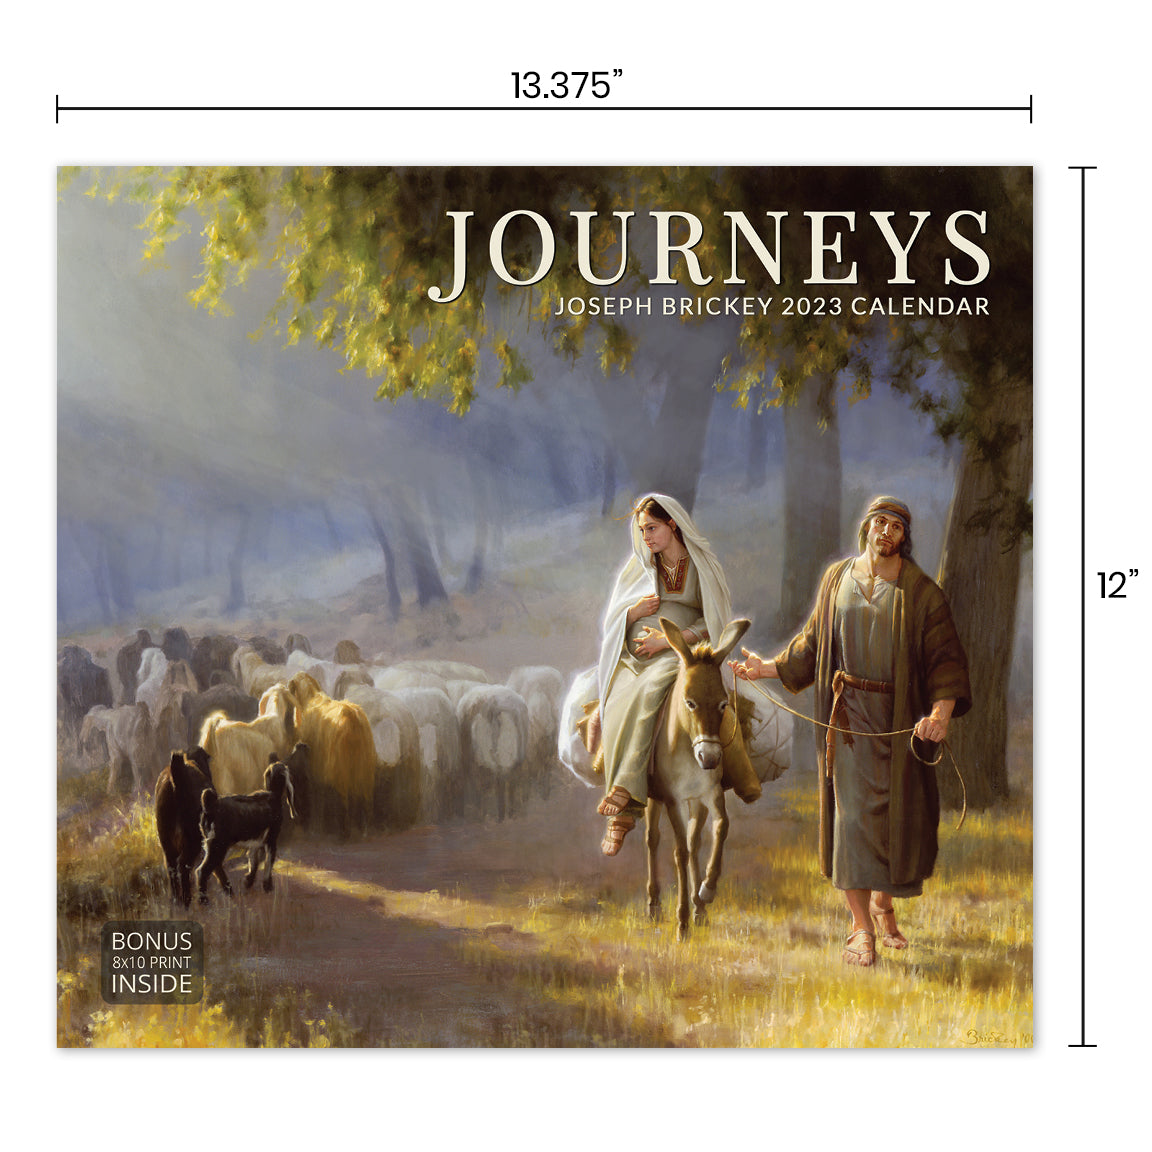 2023 Joseph Brickey Calendar - Journeys